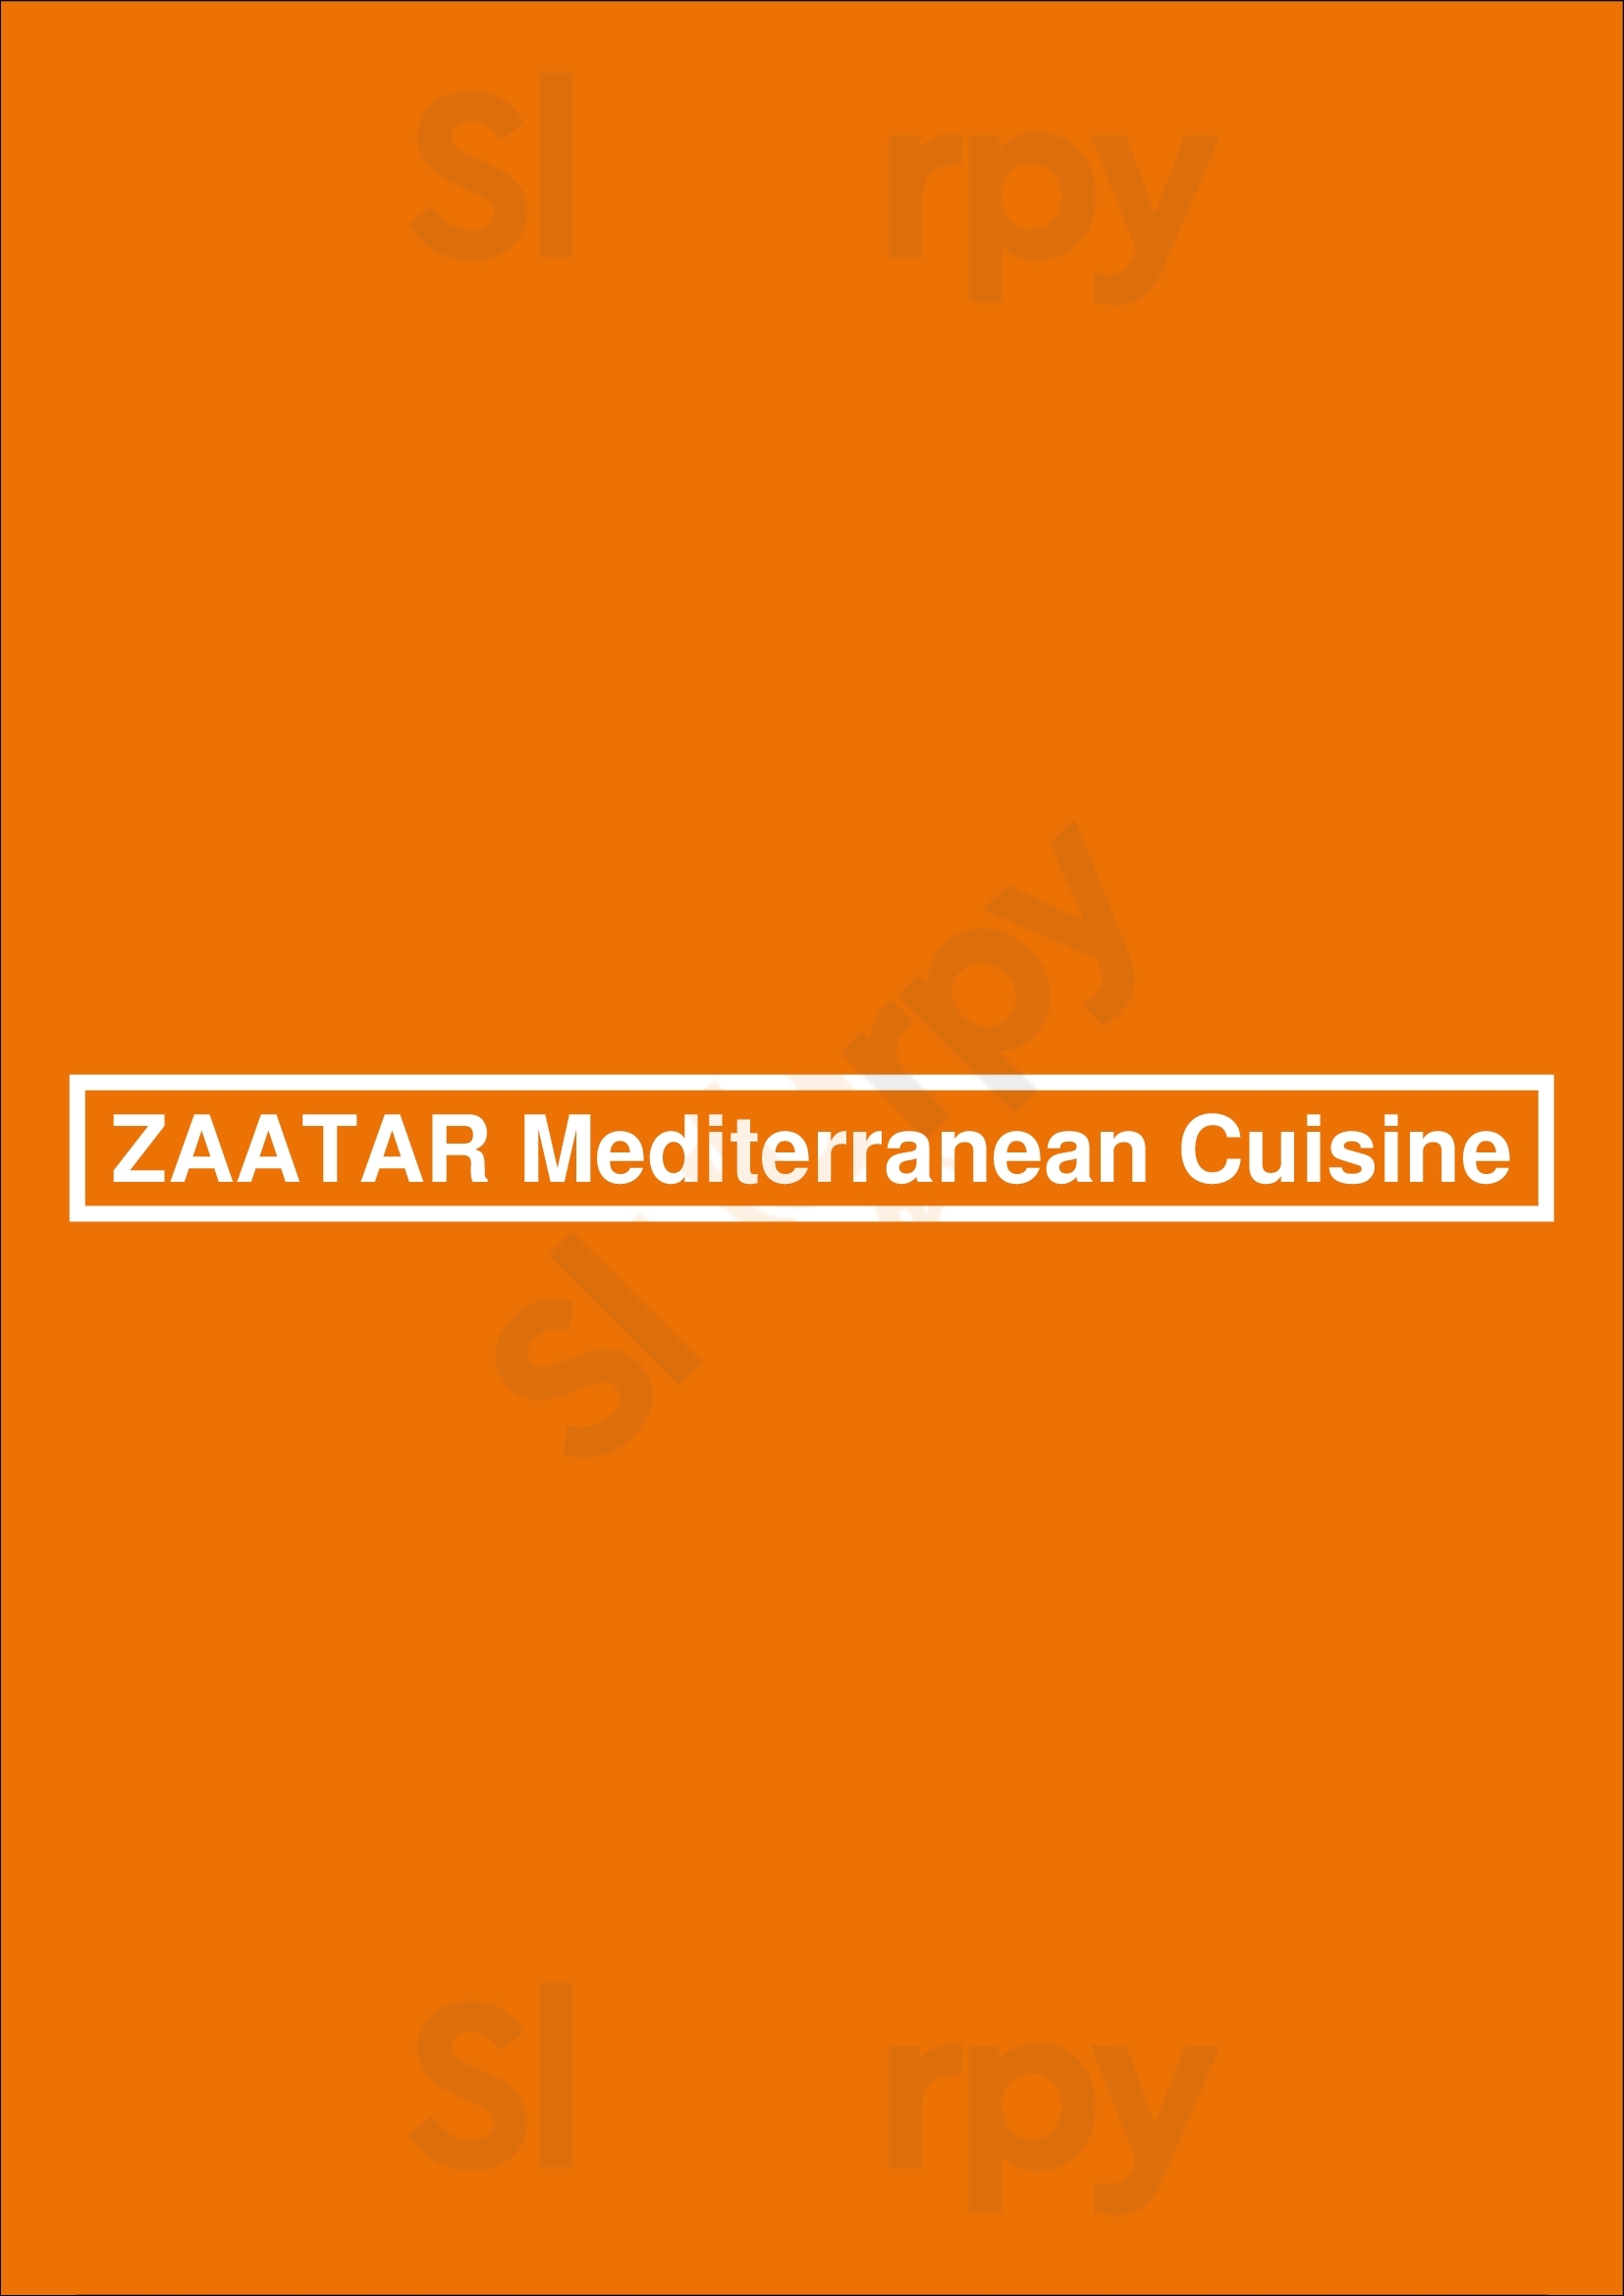 Zaatar Mediterranean Cuisine Baltimore Menu - 1